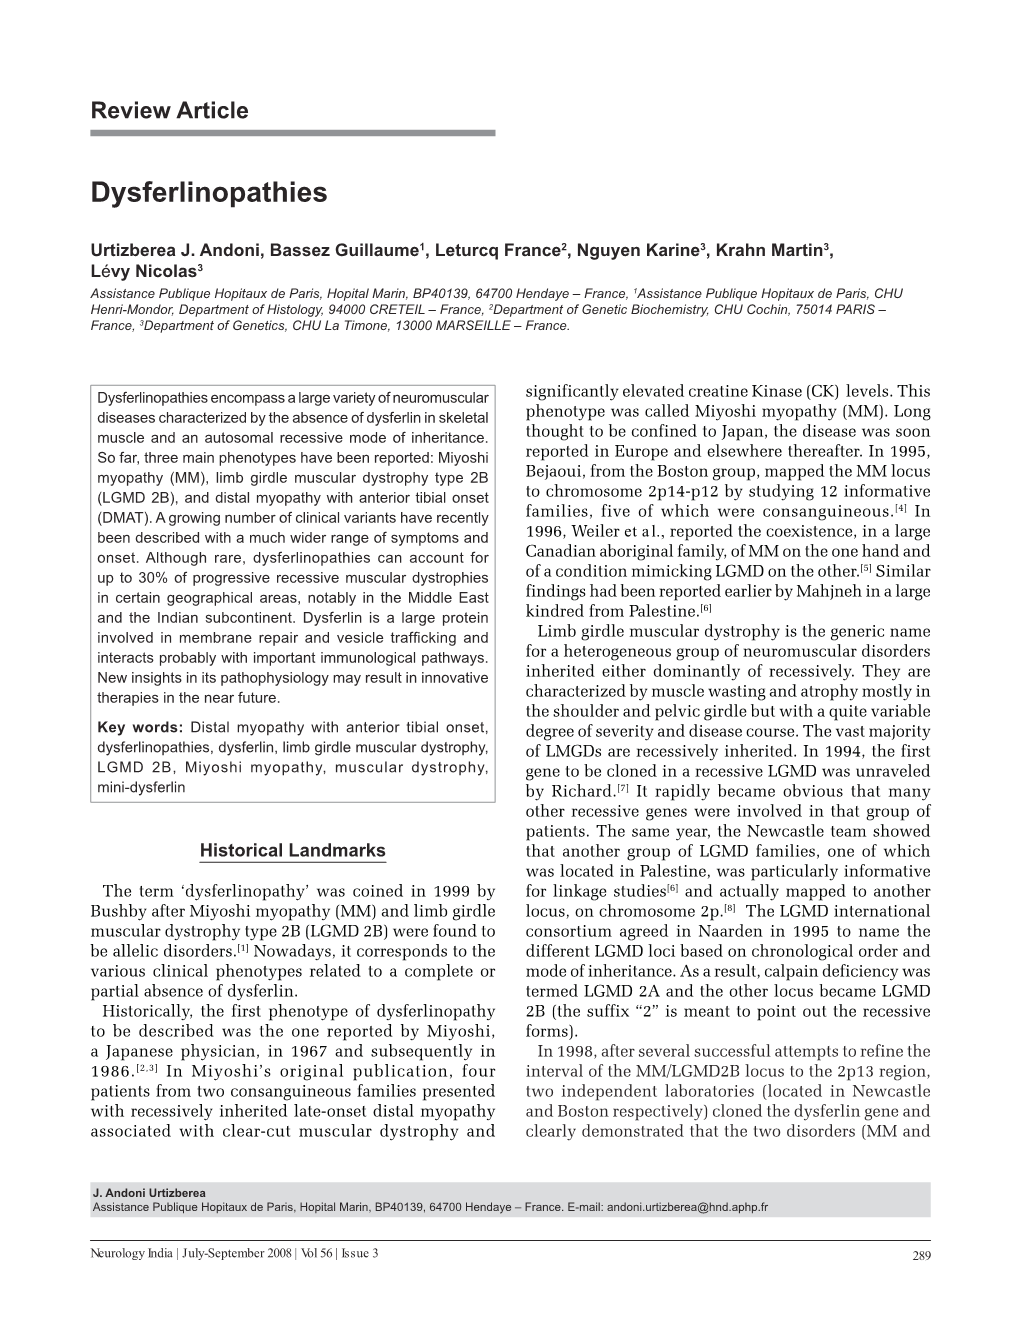 Dysferlinopathies